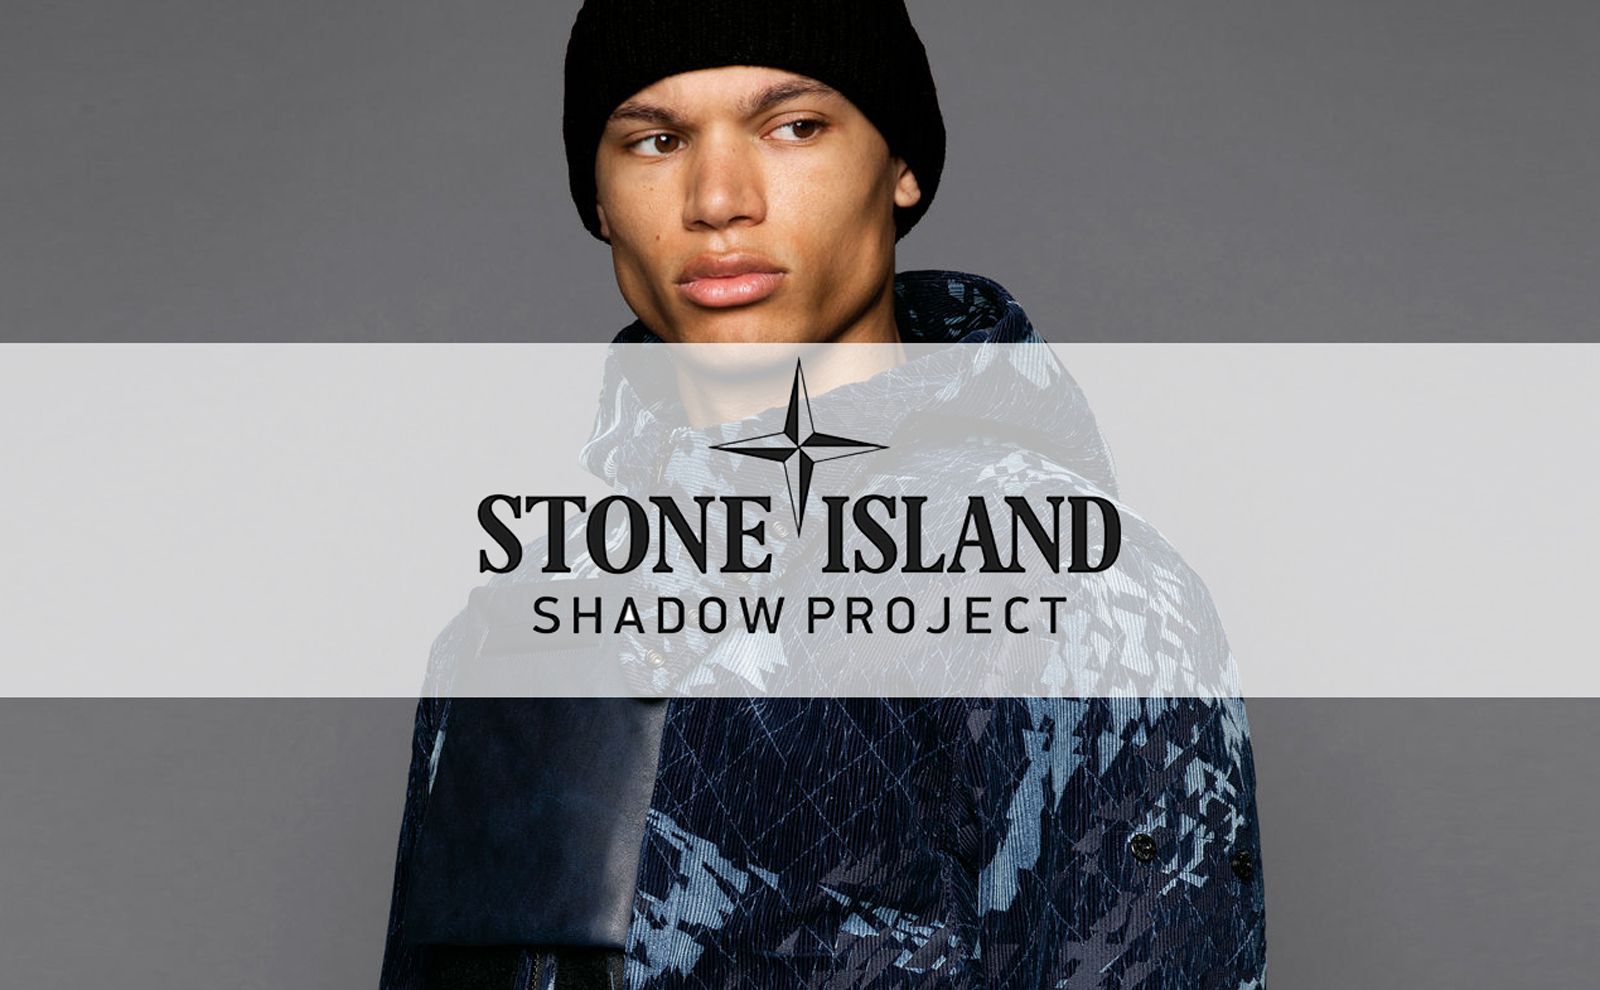 STONE ISLAND SHADOW PROJECT STONE ISLAND SHADOW PROJECT / 20aw